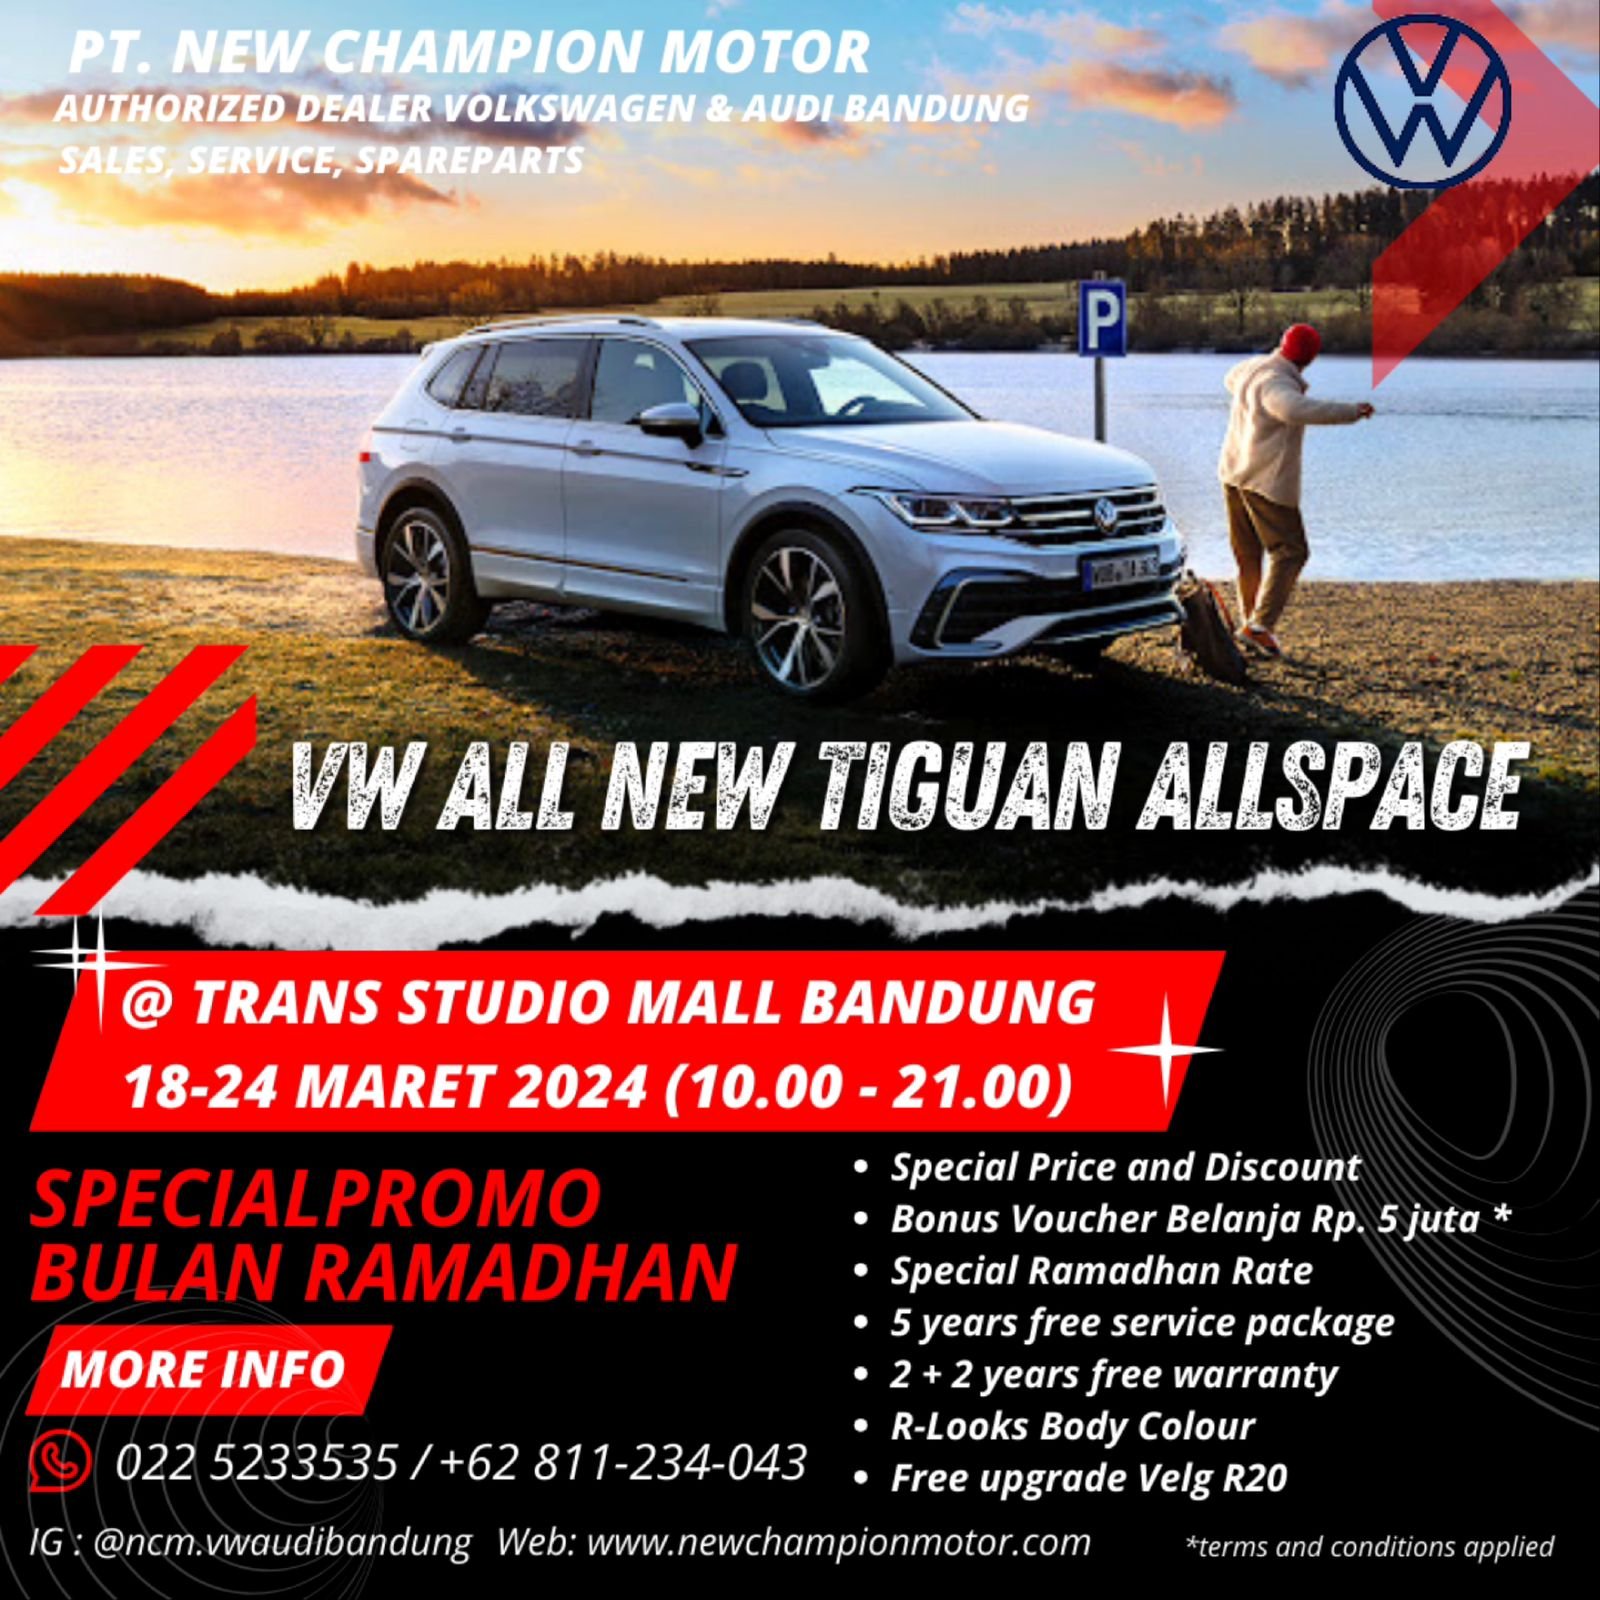 VW All New Tiguan Allspace @TSM Bandung